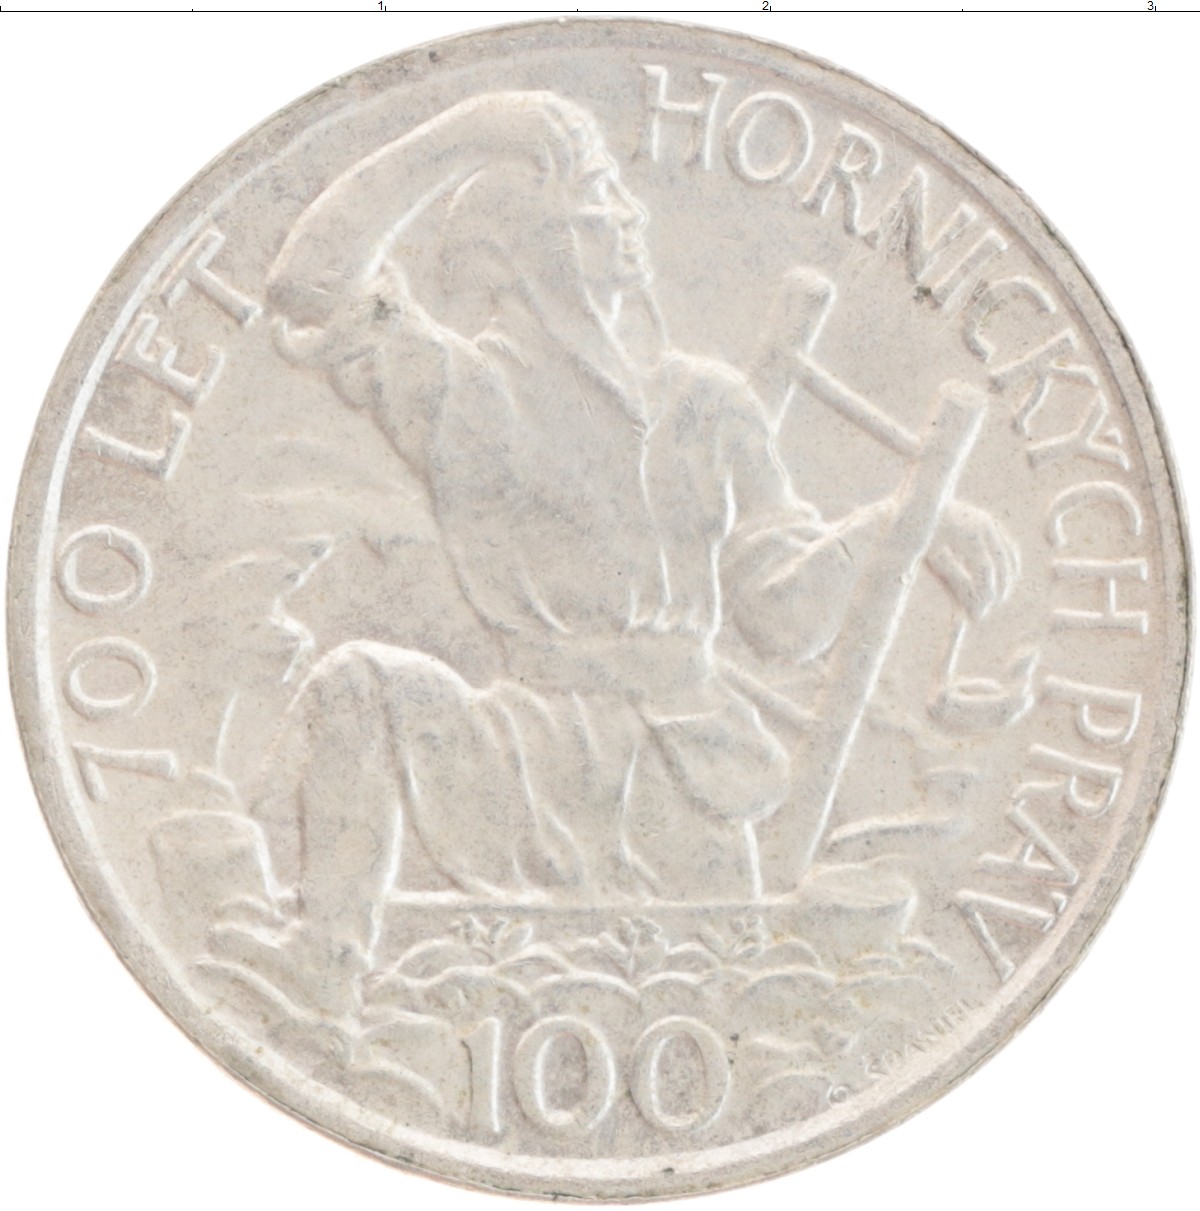 100 крон чехословакия. Чехословакия 1949. Монета 1949. Монеты 1949 года. Монета 100 лет.